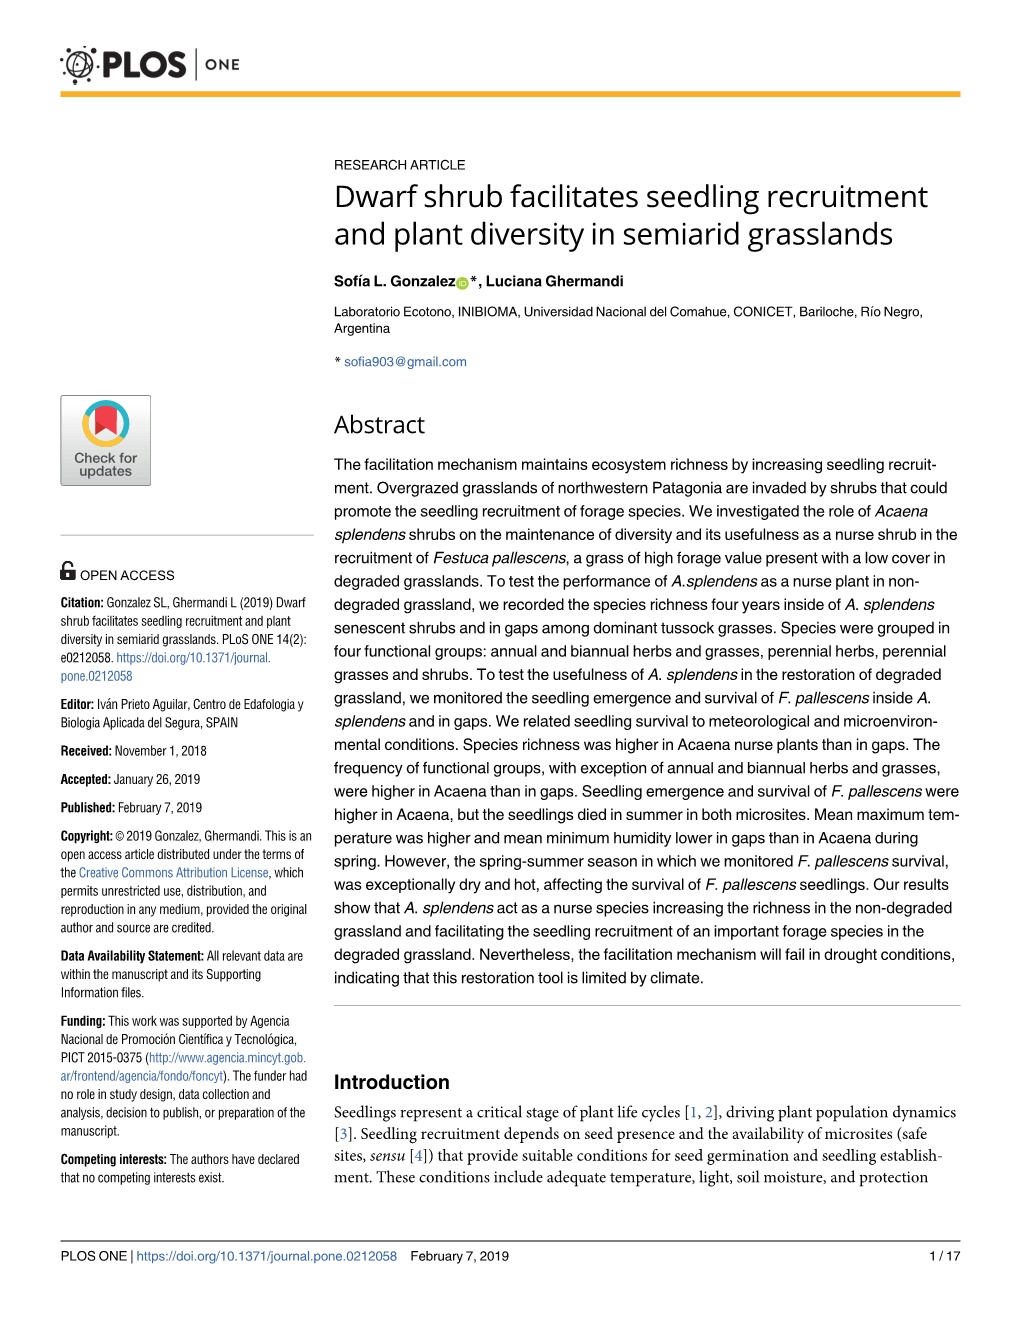 Dwarf Shrub Facilitates Seedling Recruitment and Plant Diversity in Semiarid Grasslands